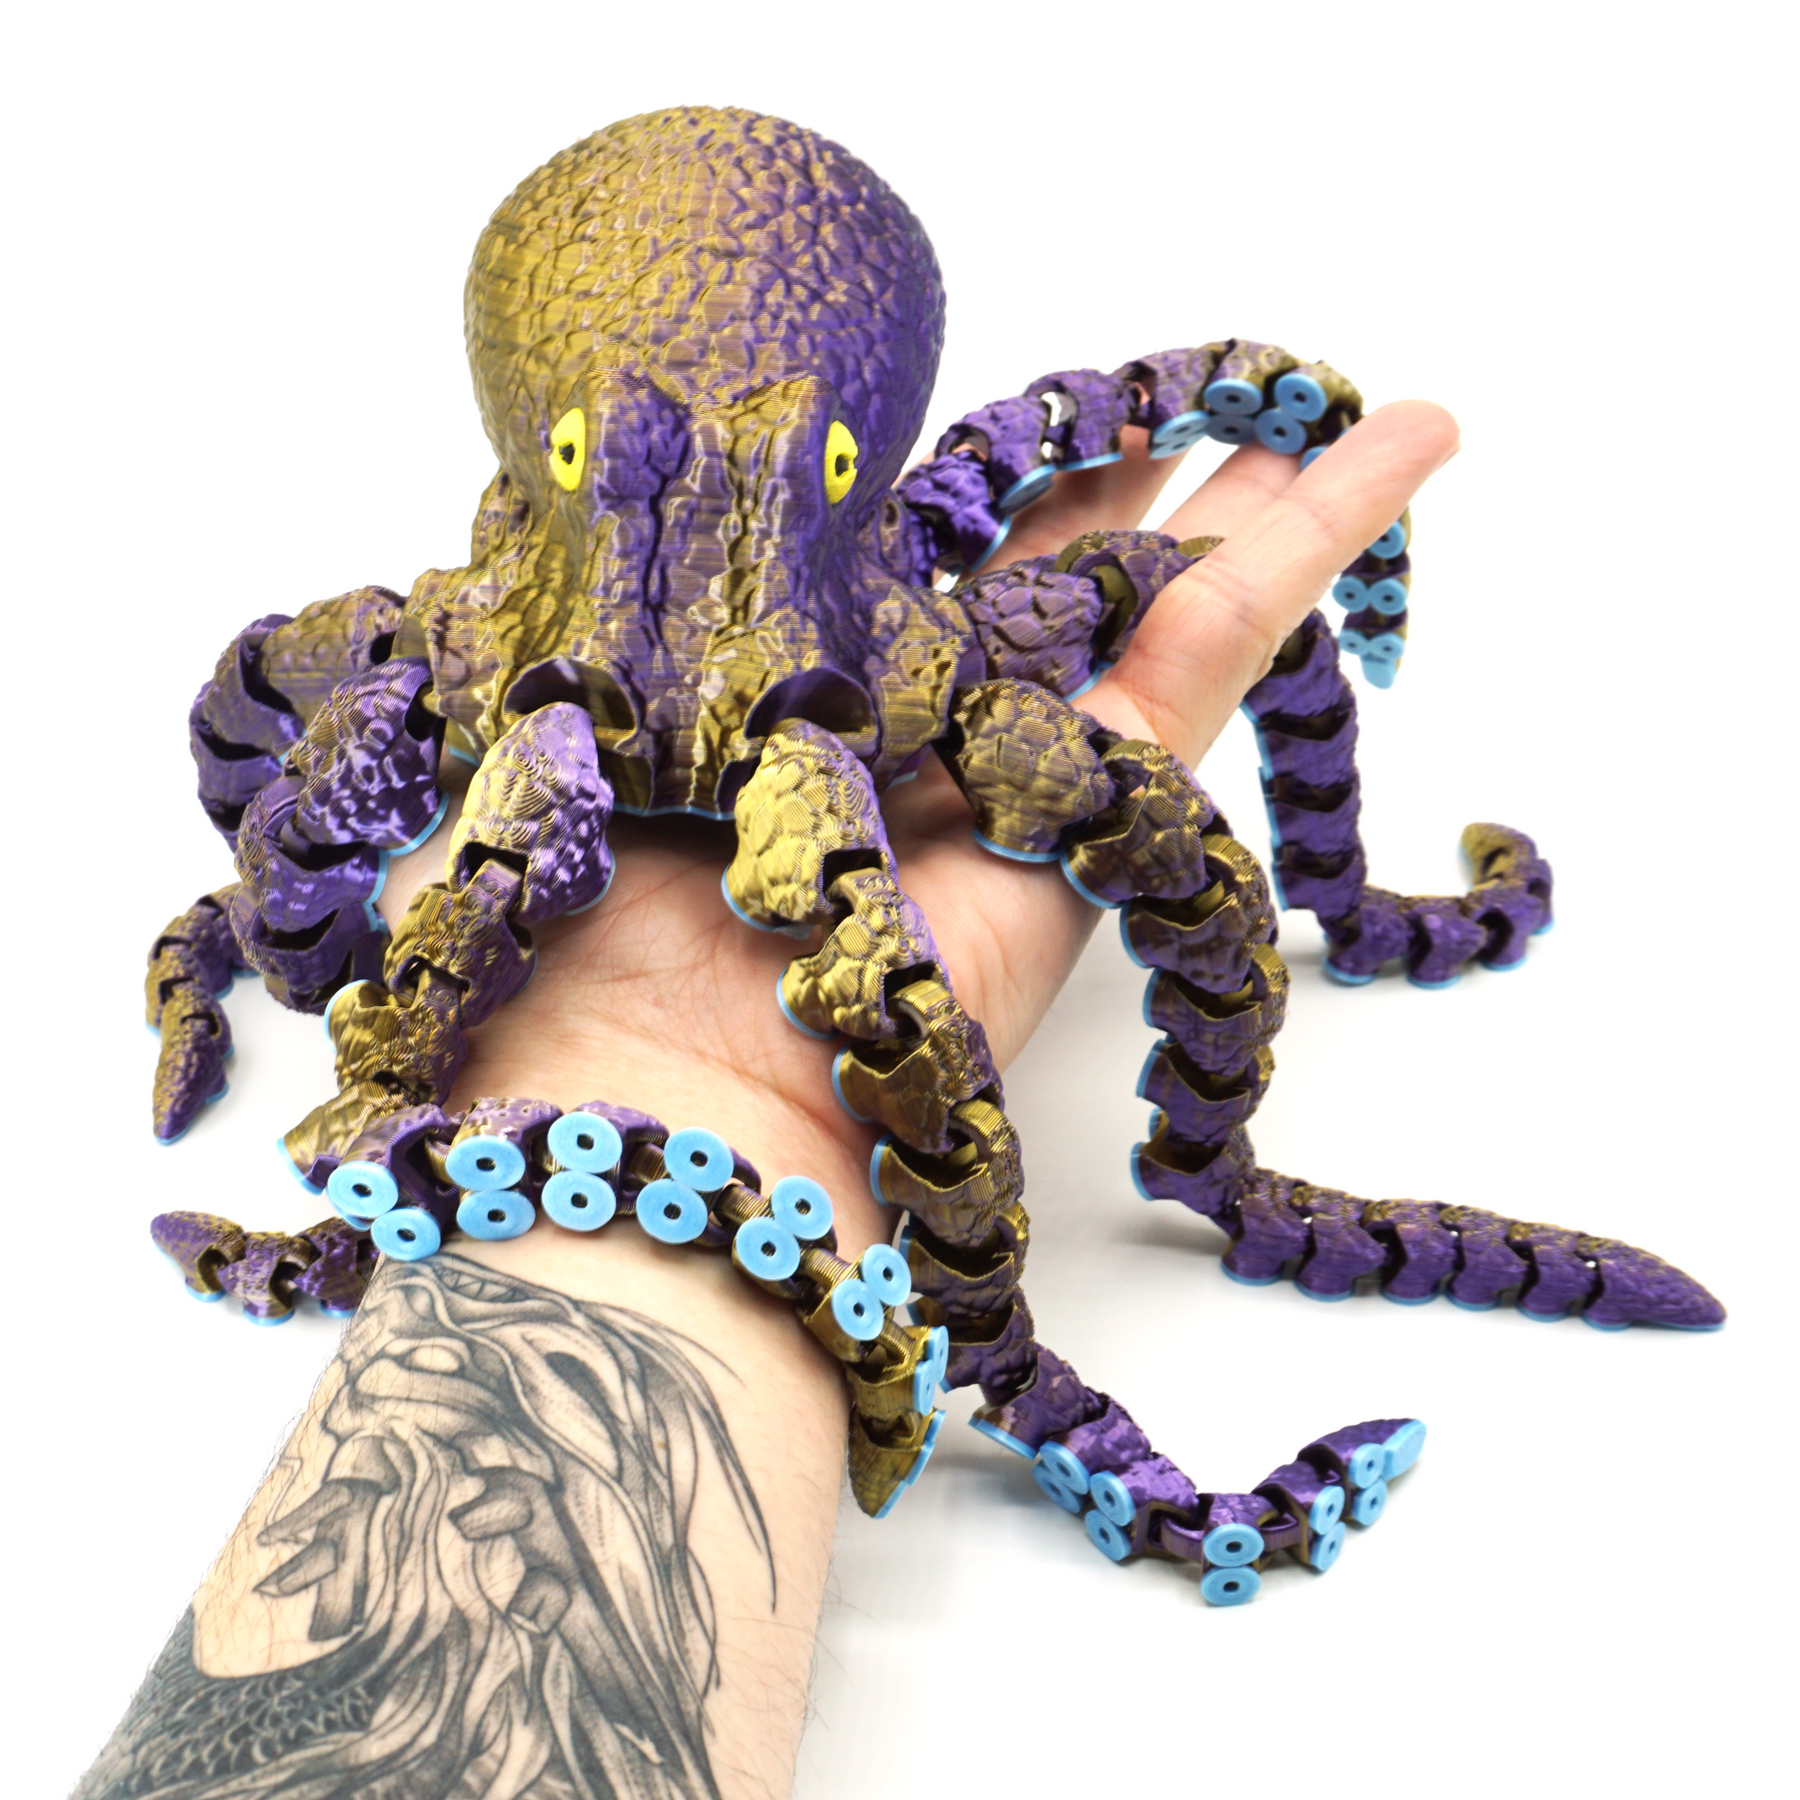 Octopus 2.0 - Textured Edition